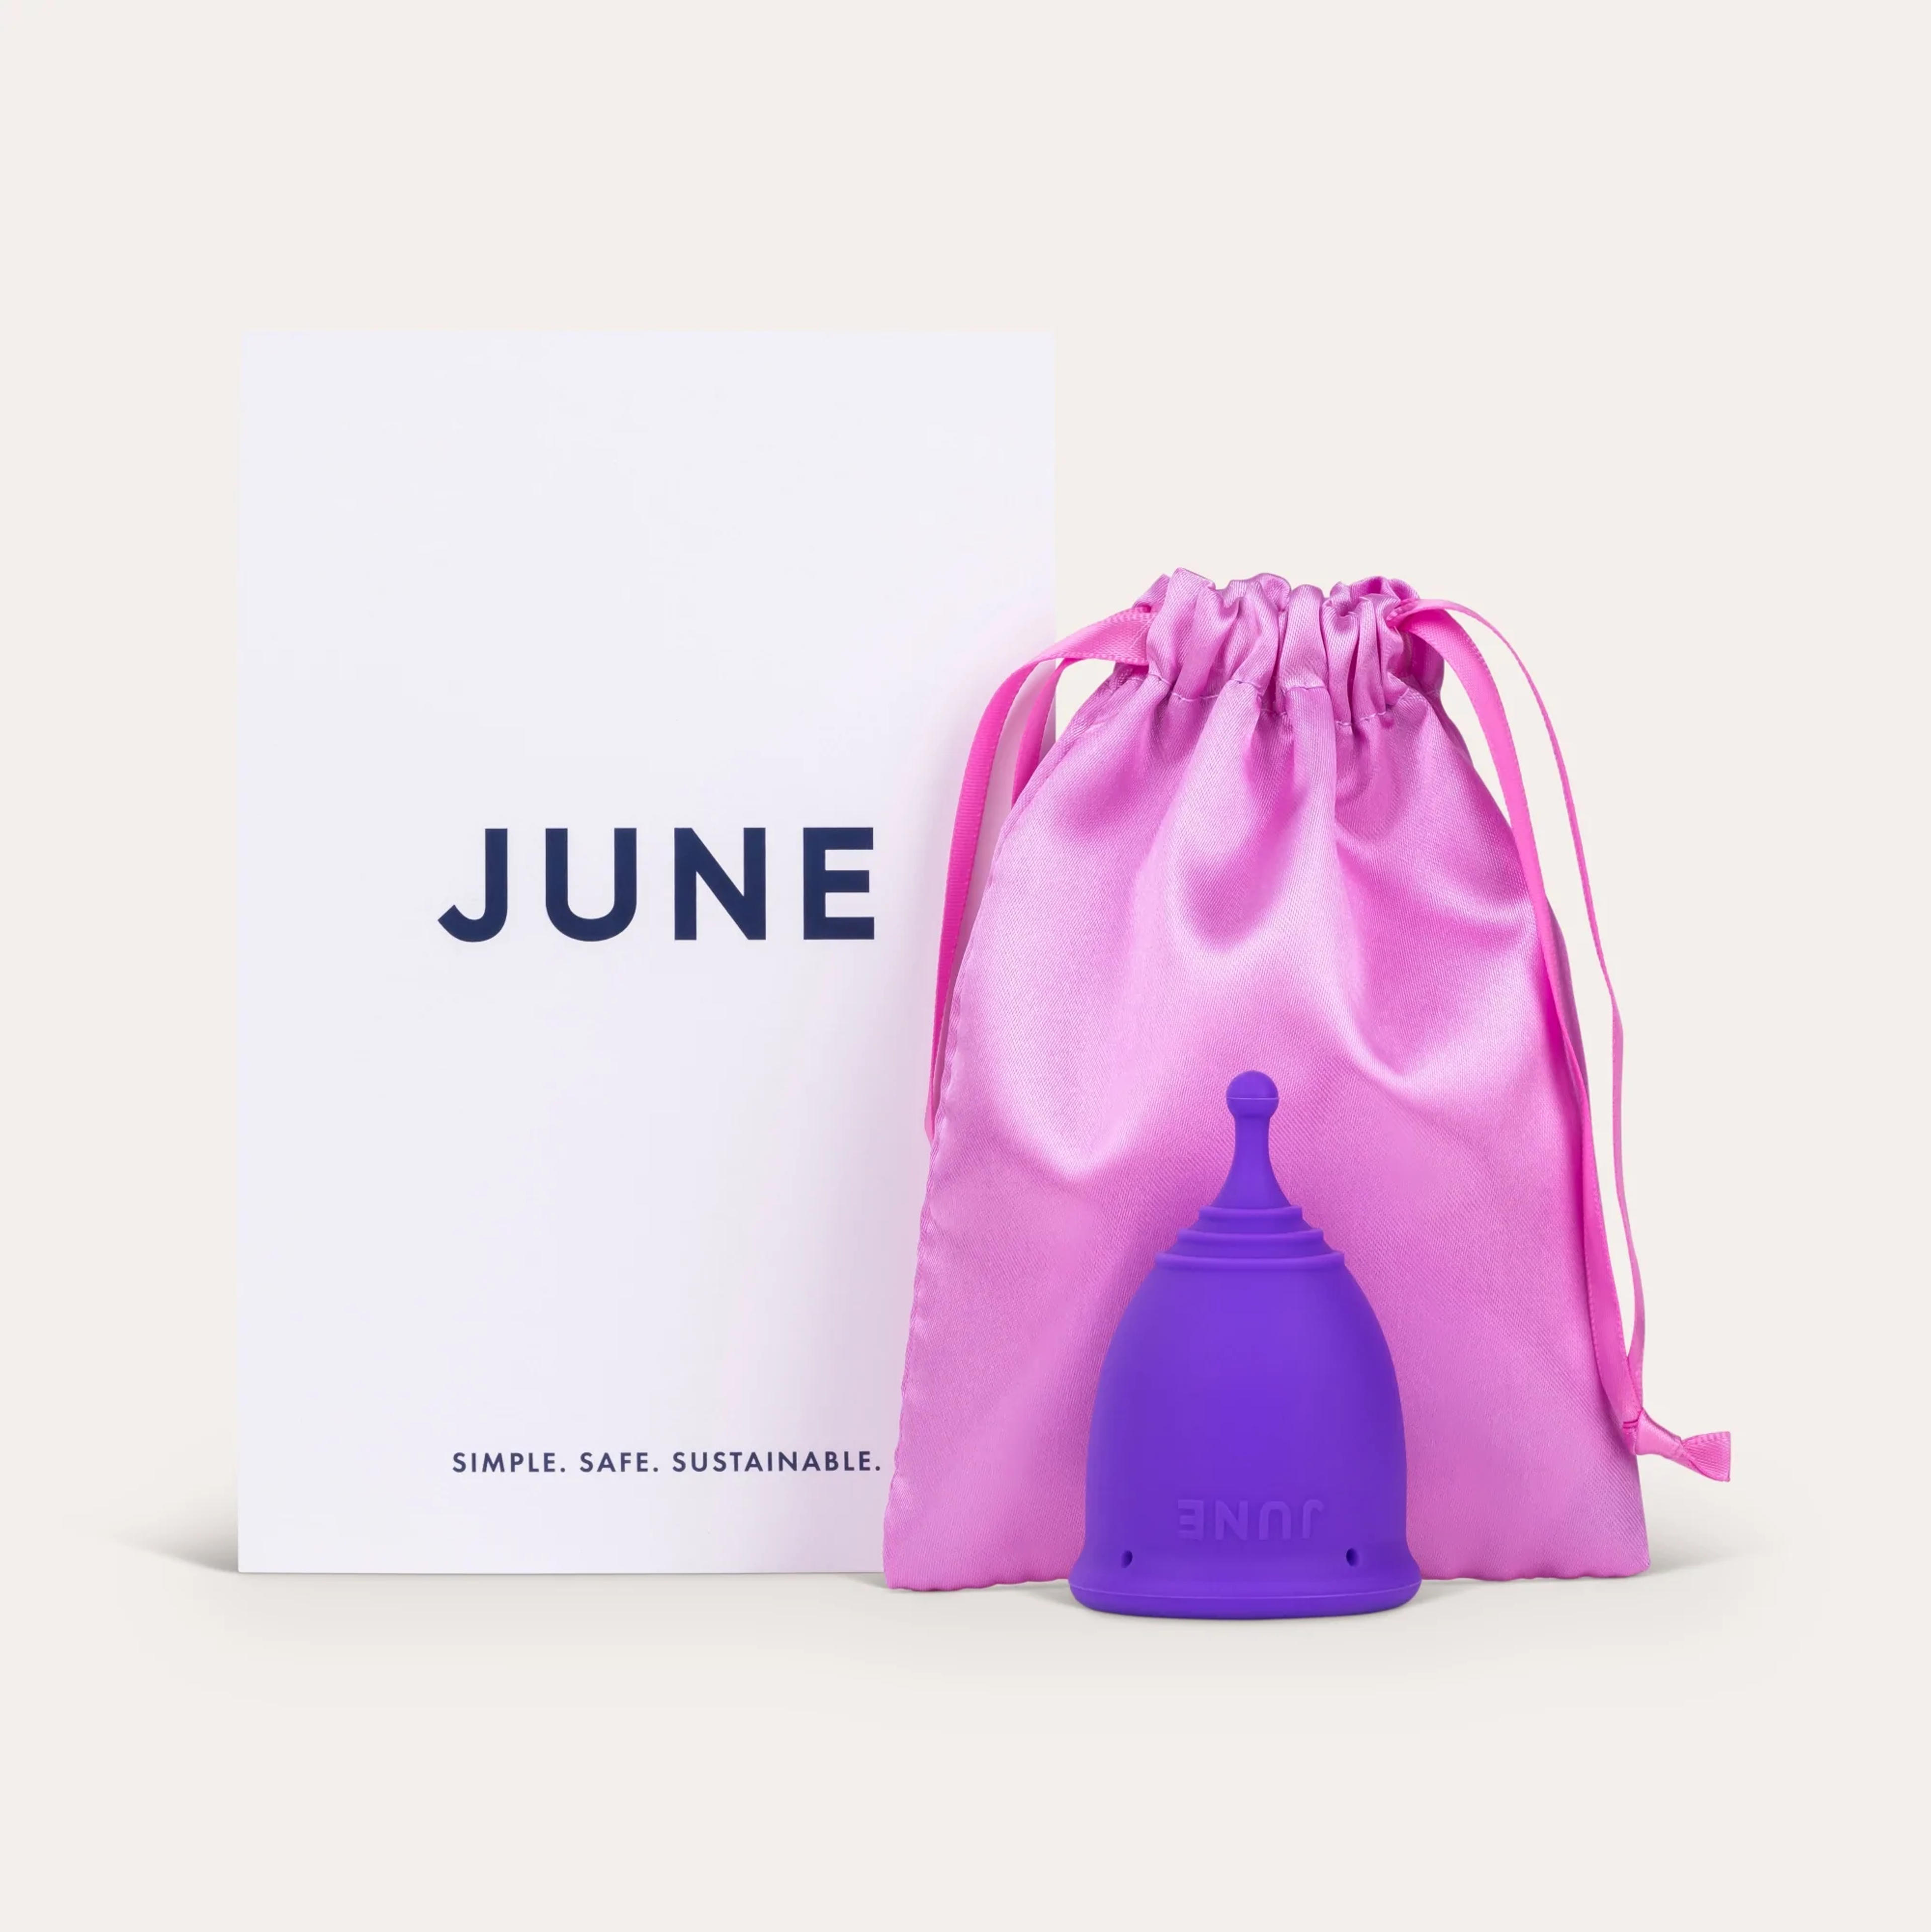 The Original June Menstrual Cup - Purple - Small